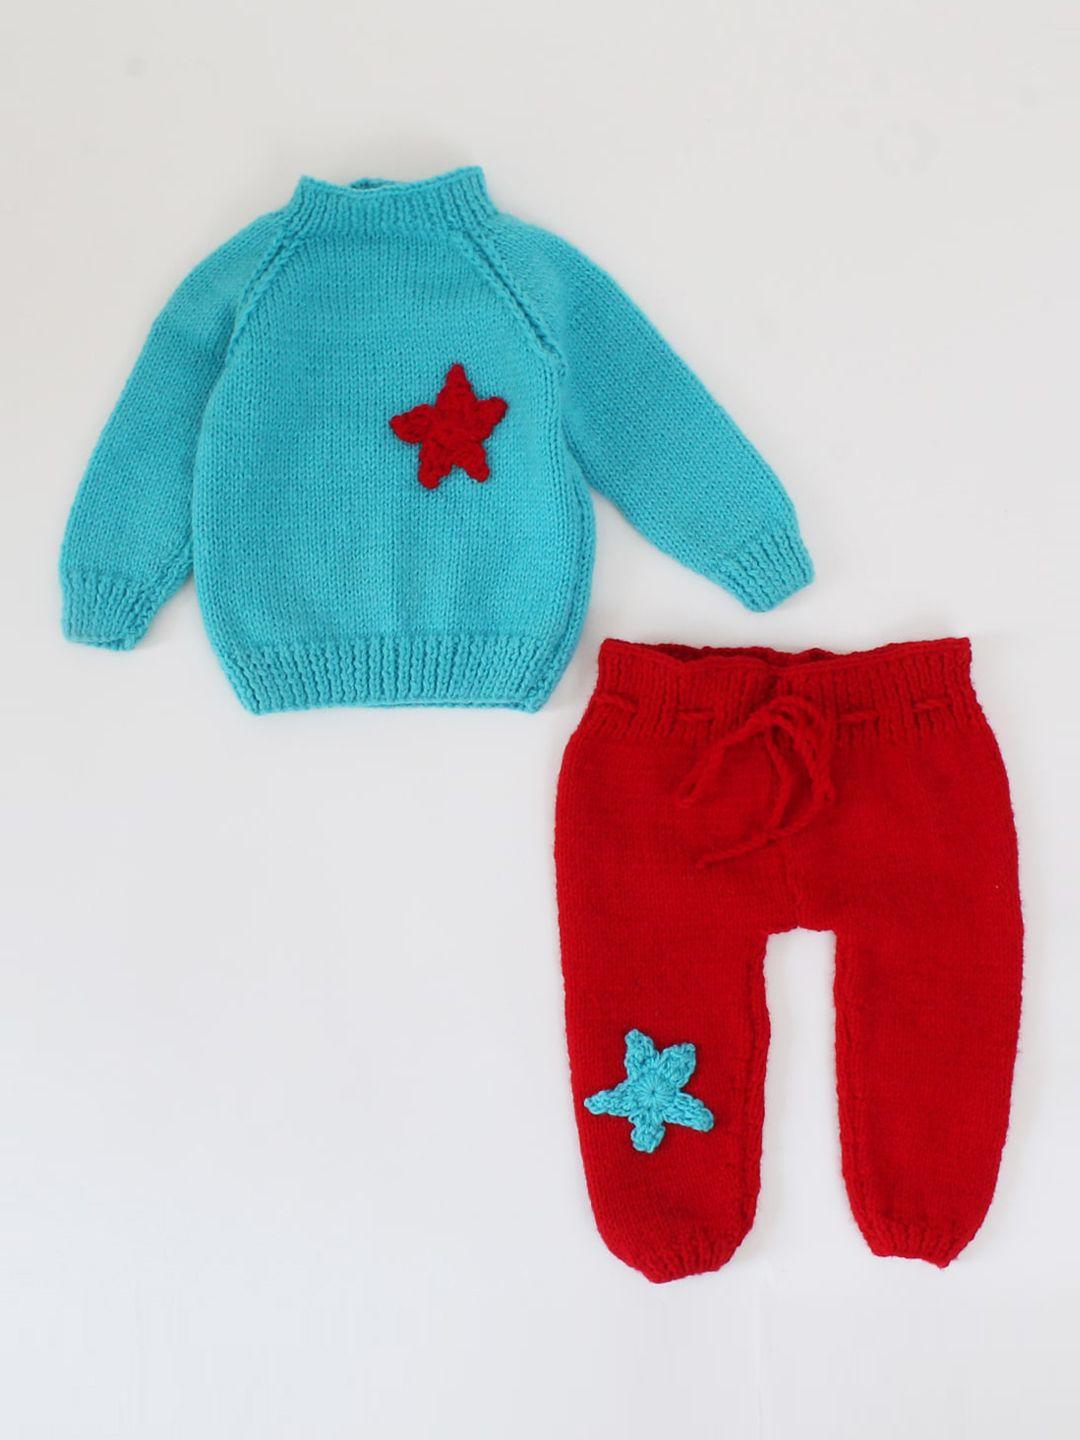 woonie-unisex-kids-red-clothing-set